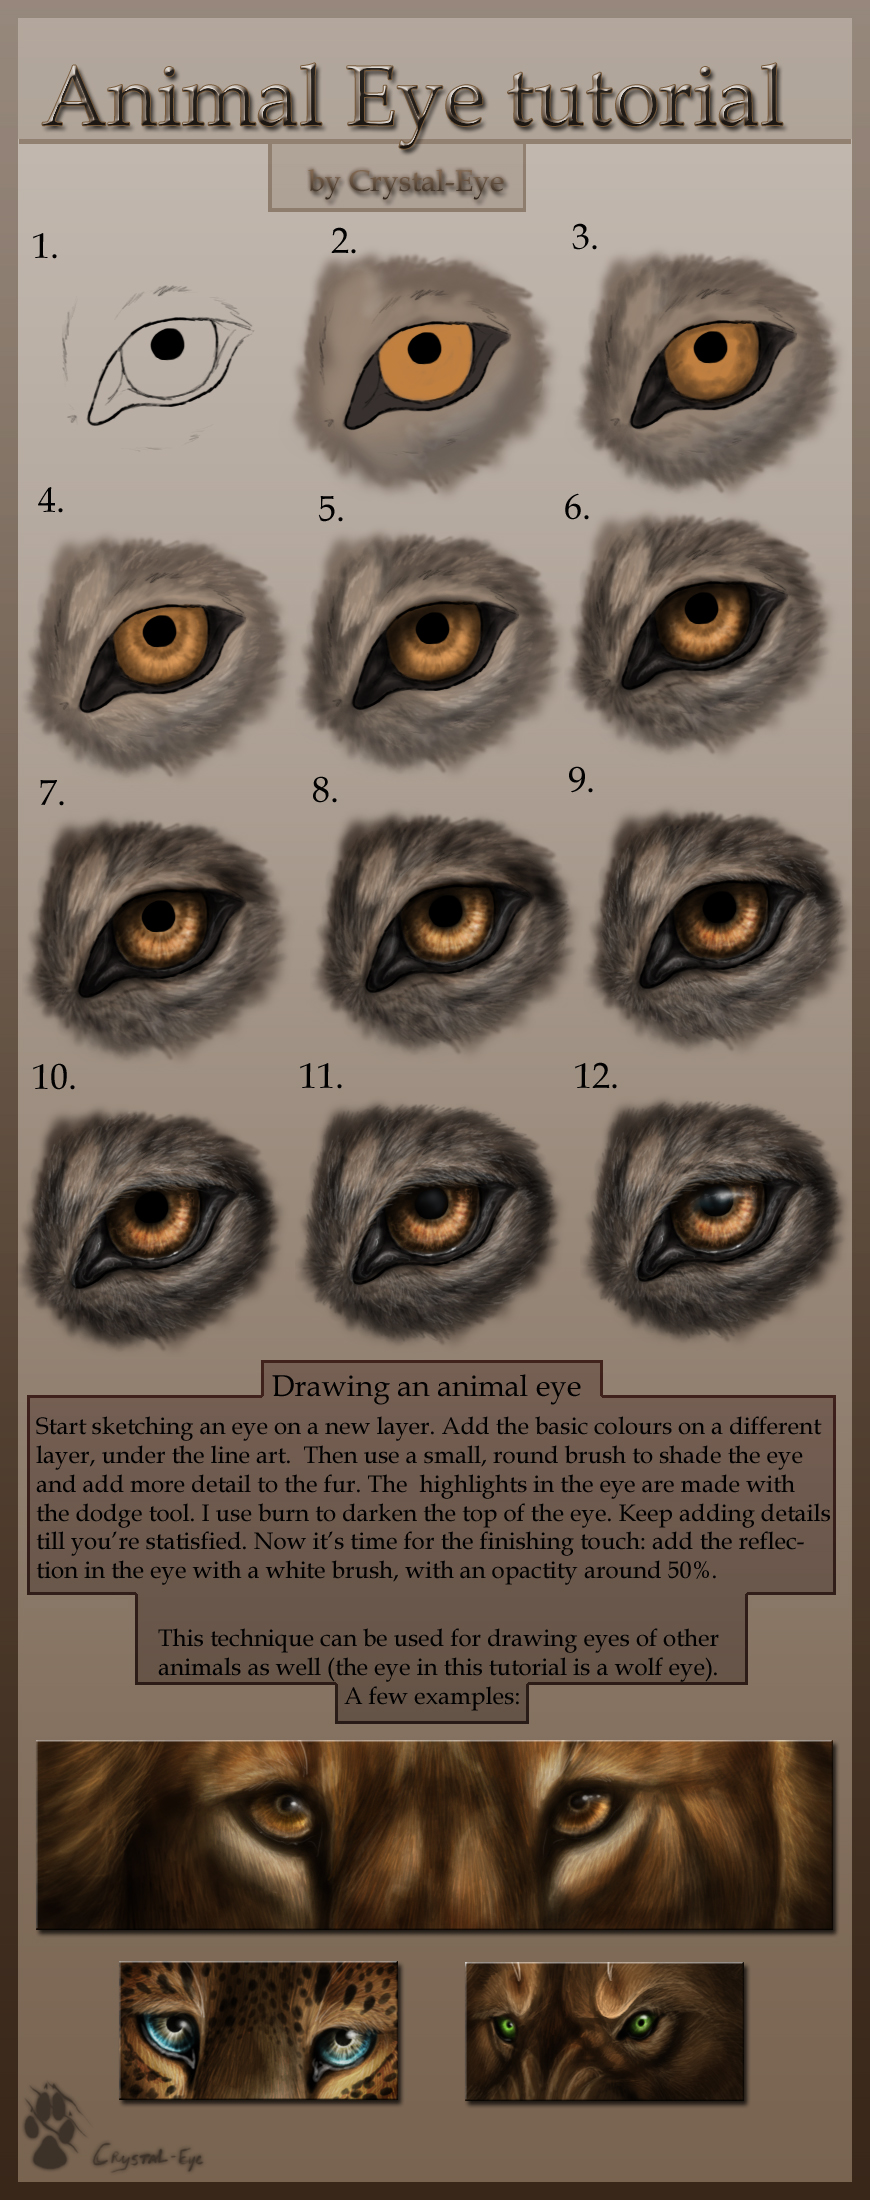 http://fc09.deviantart.net/fs37/f/2008/250/6/9/Animal_Eye_tutorial_by_Crystal_Eye.jpg